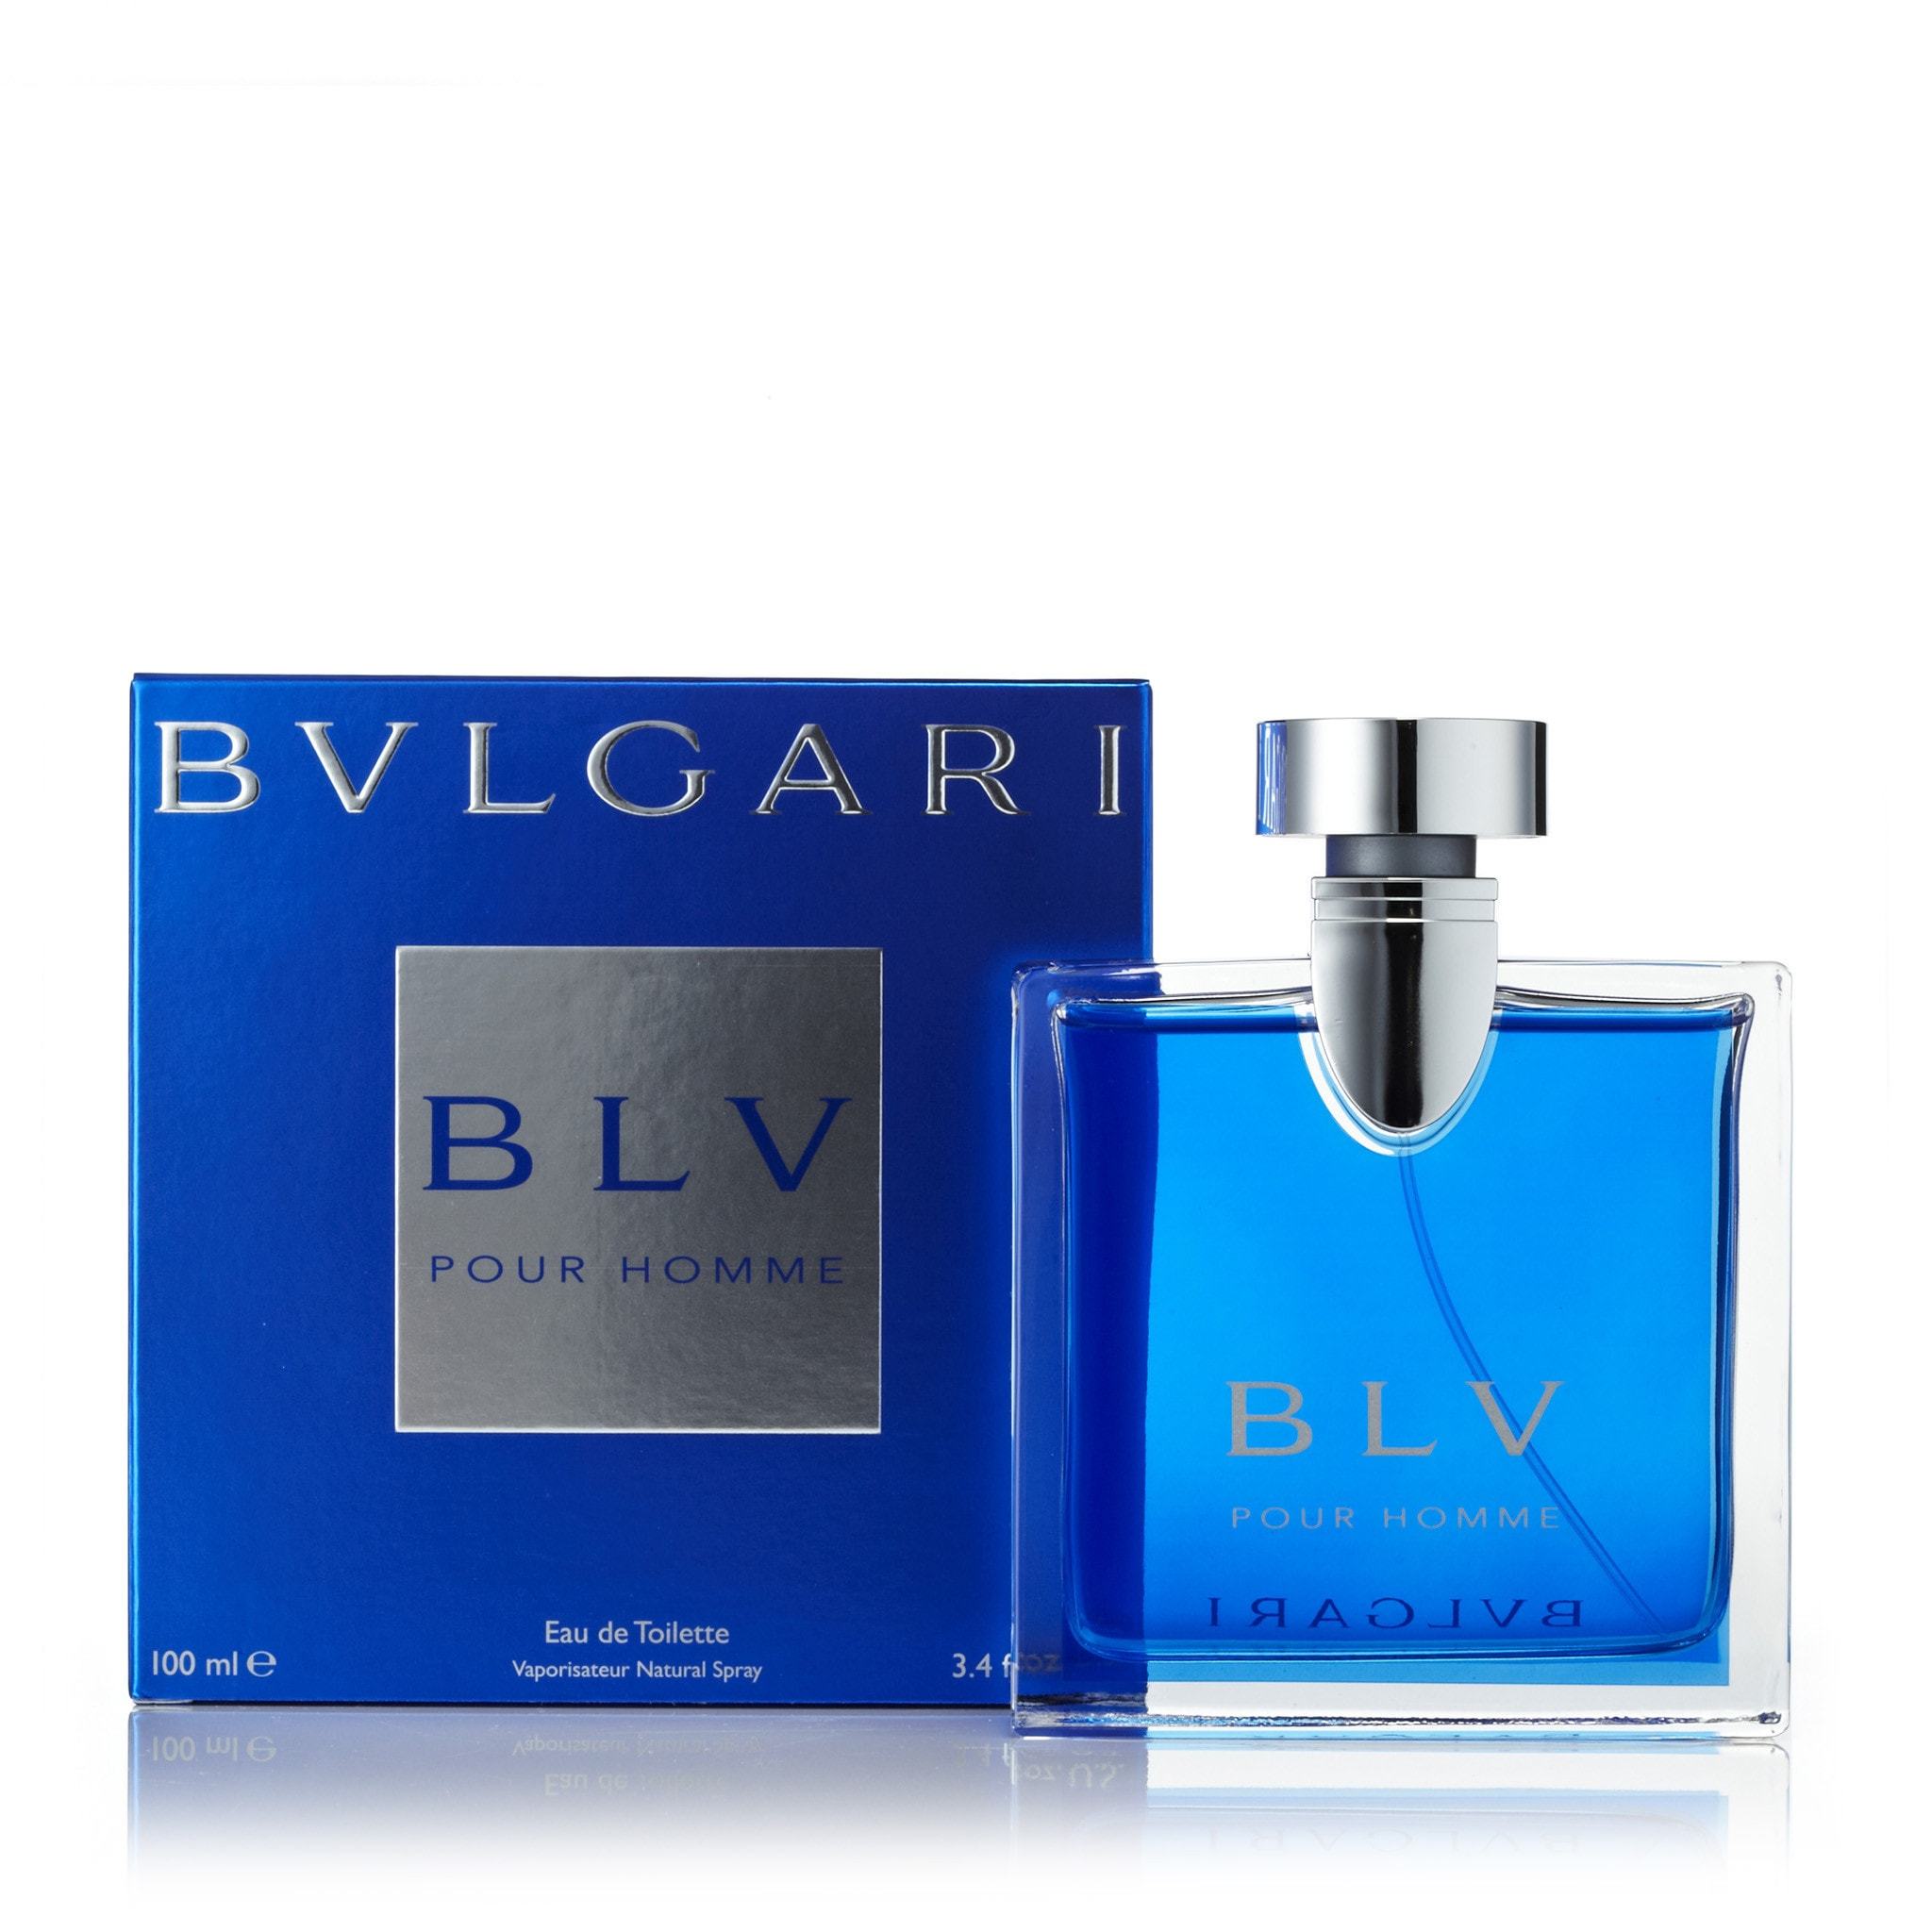 Bvlgari Blv Cologne by Bvlgari (Bulgari) Review 